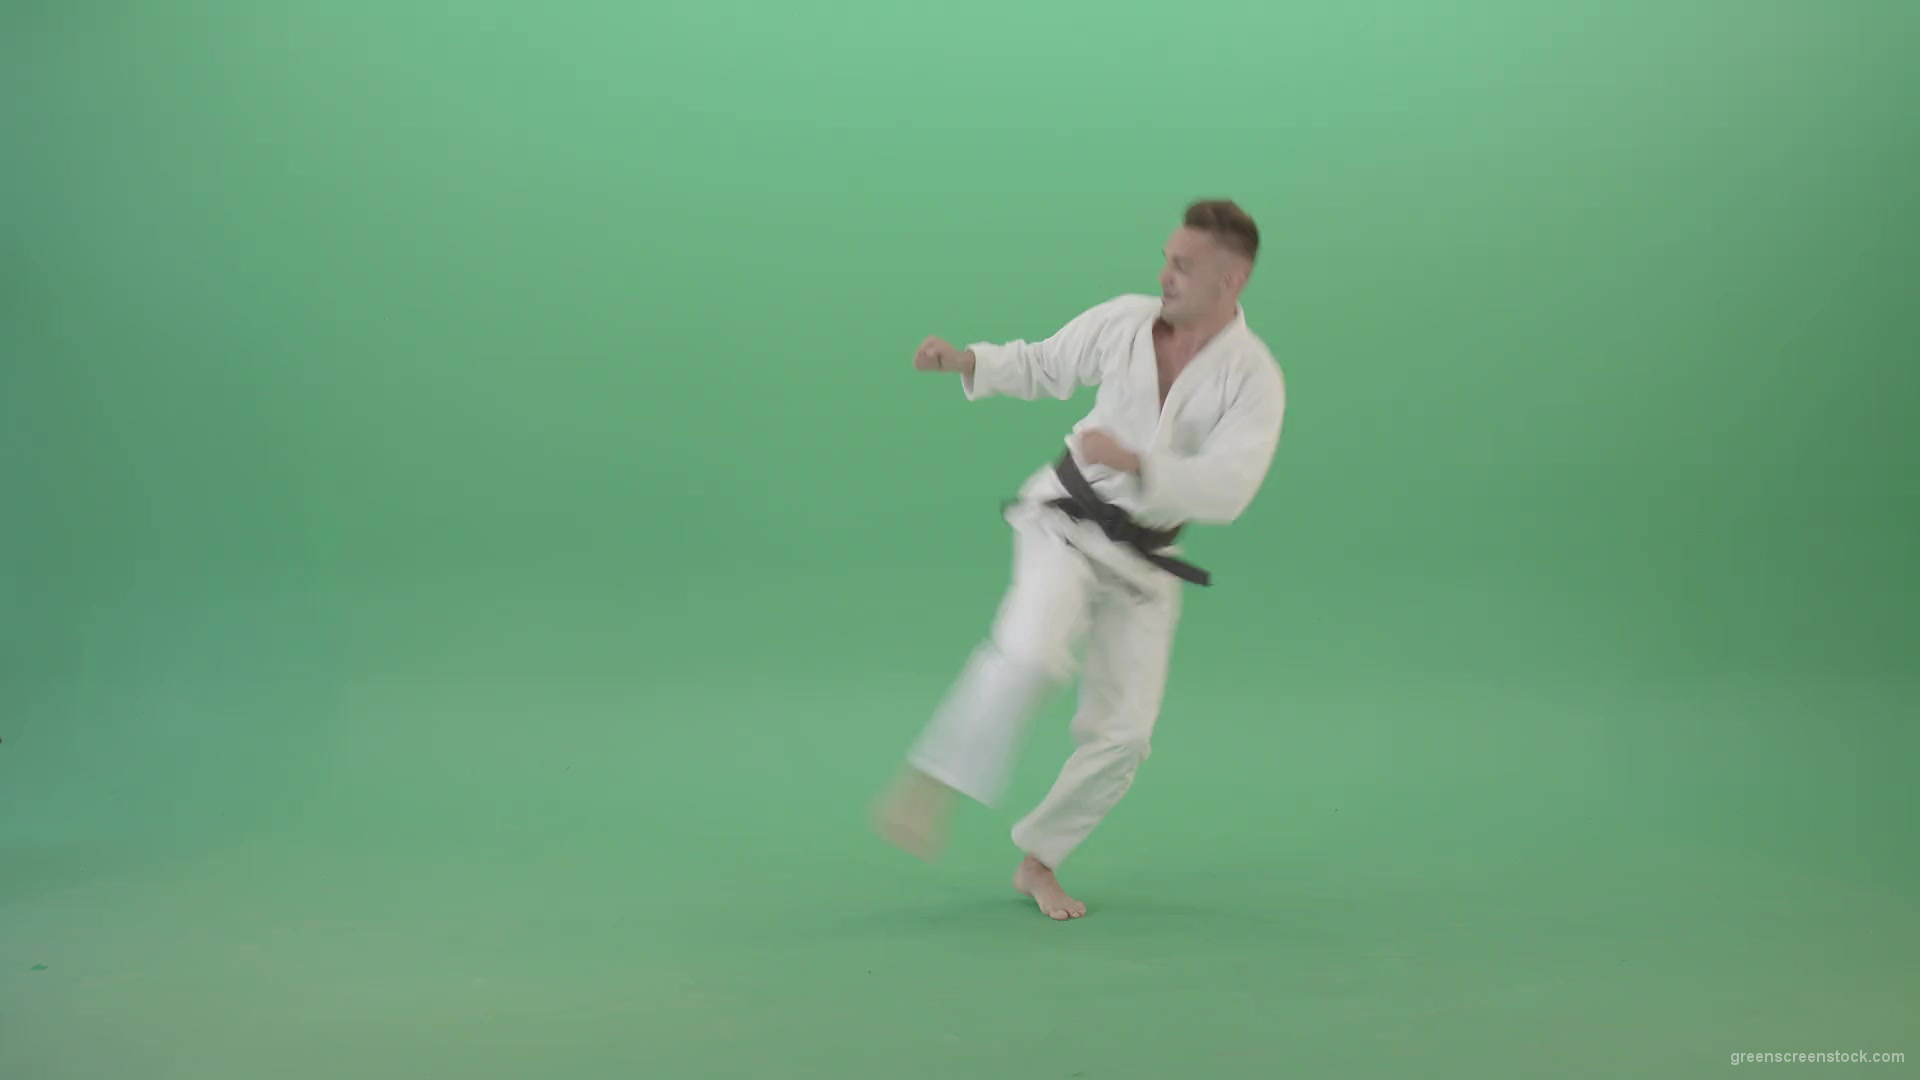 Mortal-Kombat-by-Karate-Ju-Jutsu-trainer-sportsman-isolated-on-green-screen-4K-Video-Footage-1920_001 Green Screen Stock